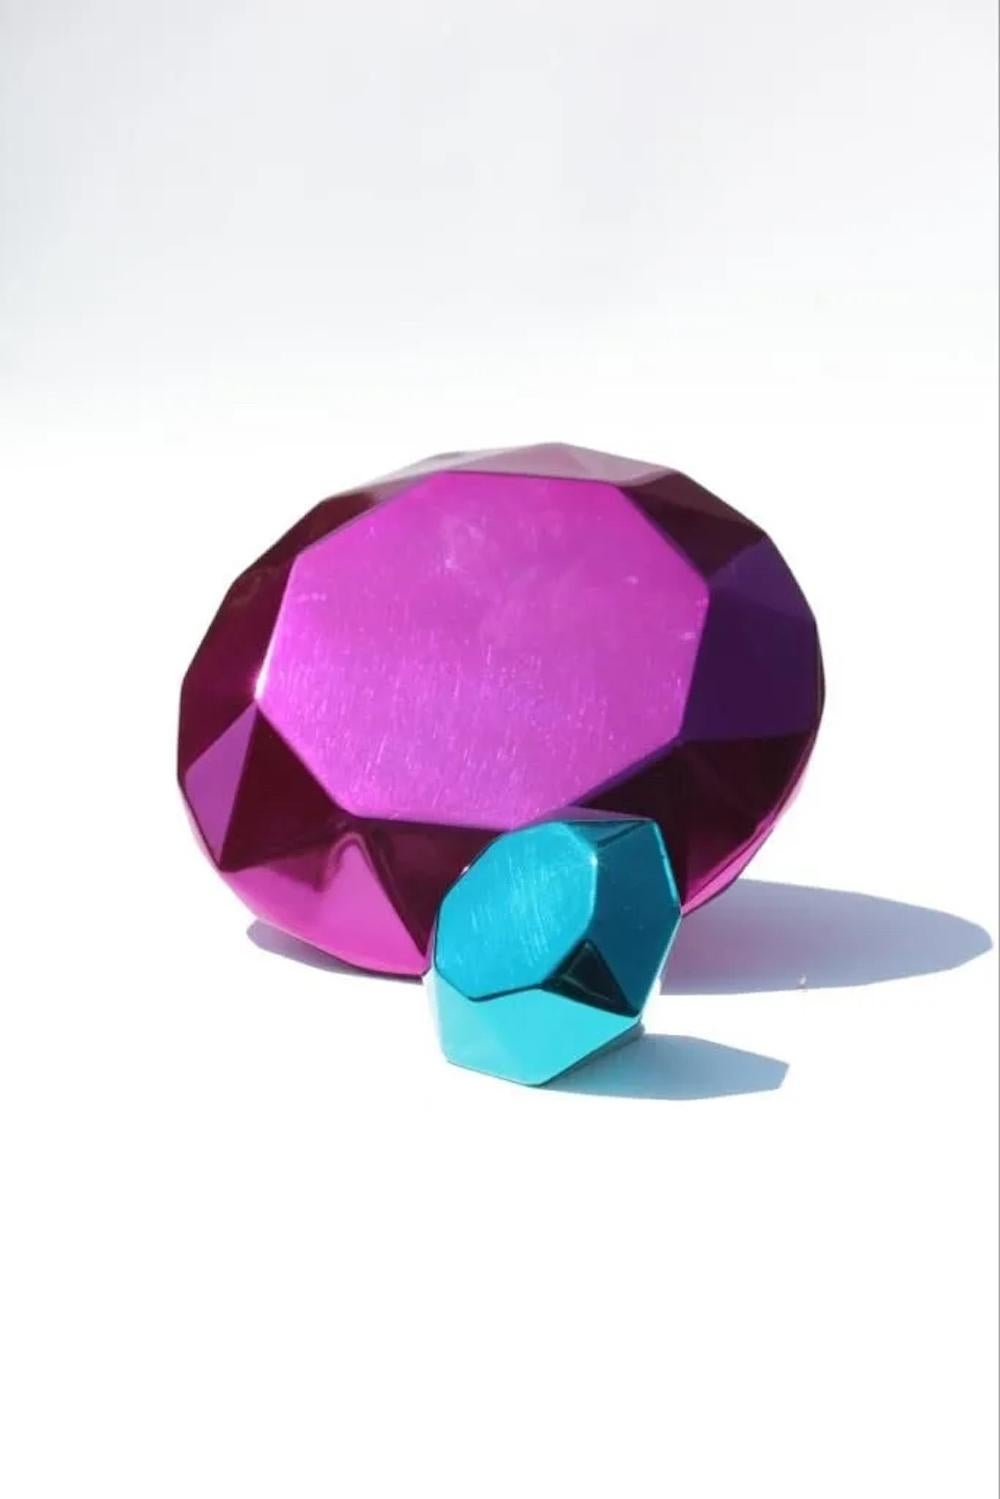  Purple Diamond - Sculpture by David Uessem